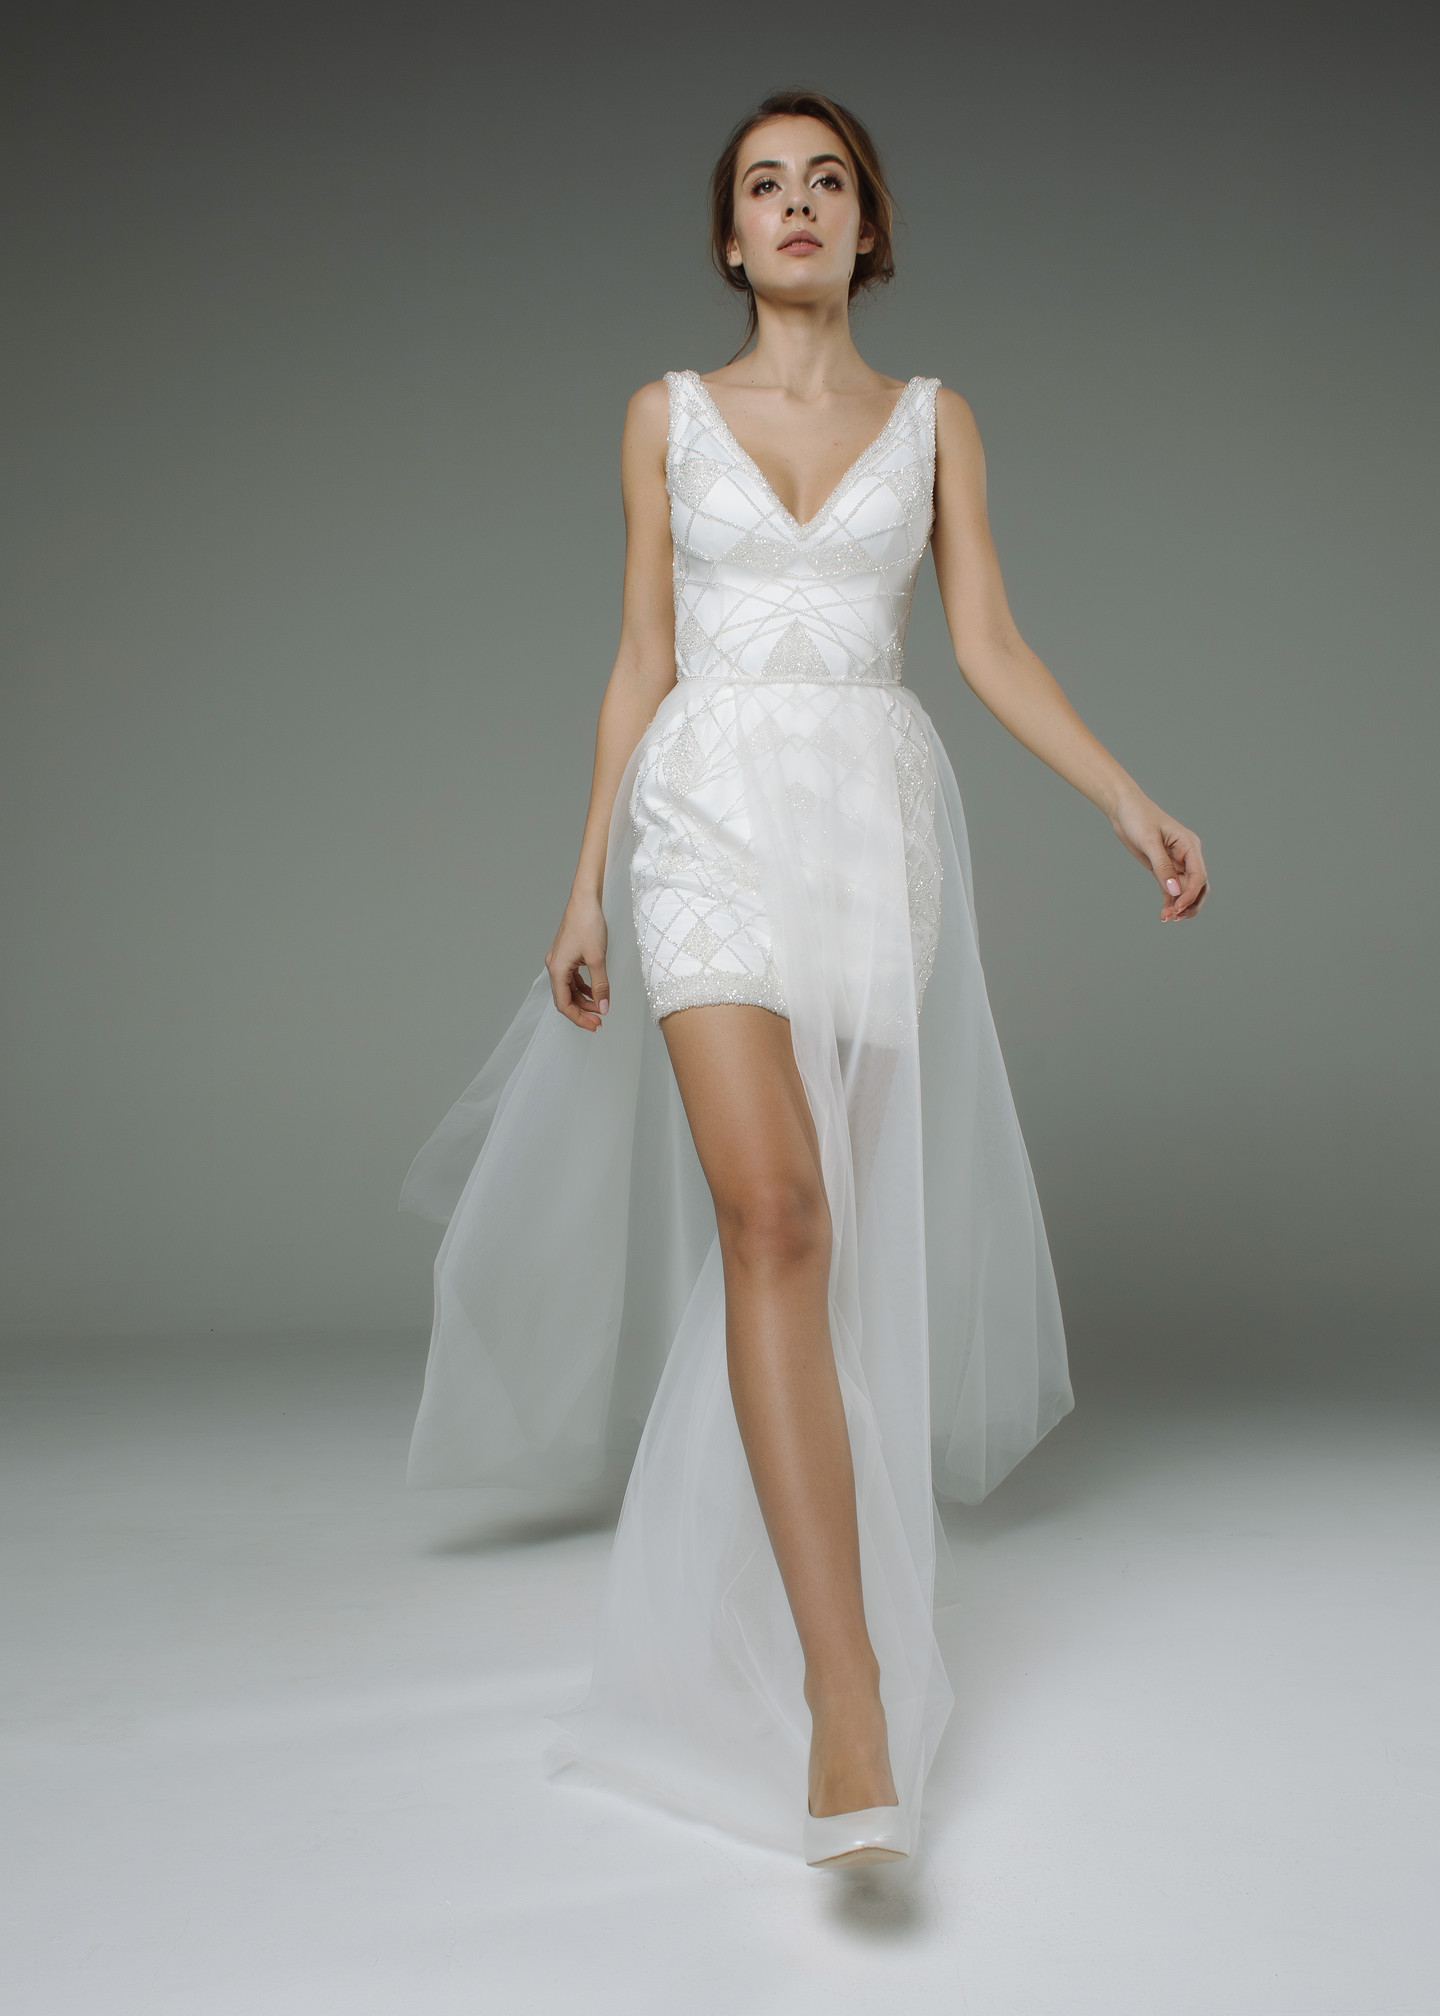 Celestine dress, 2019, couture, dress, bridal, off-white, sheath silhouette, embroidery, popular